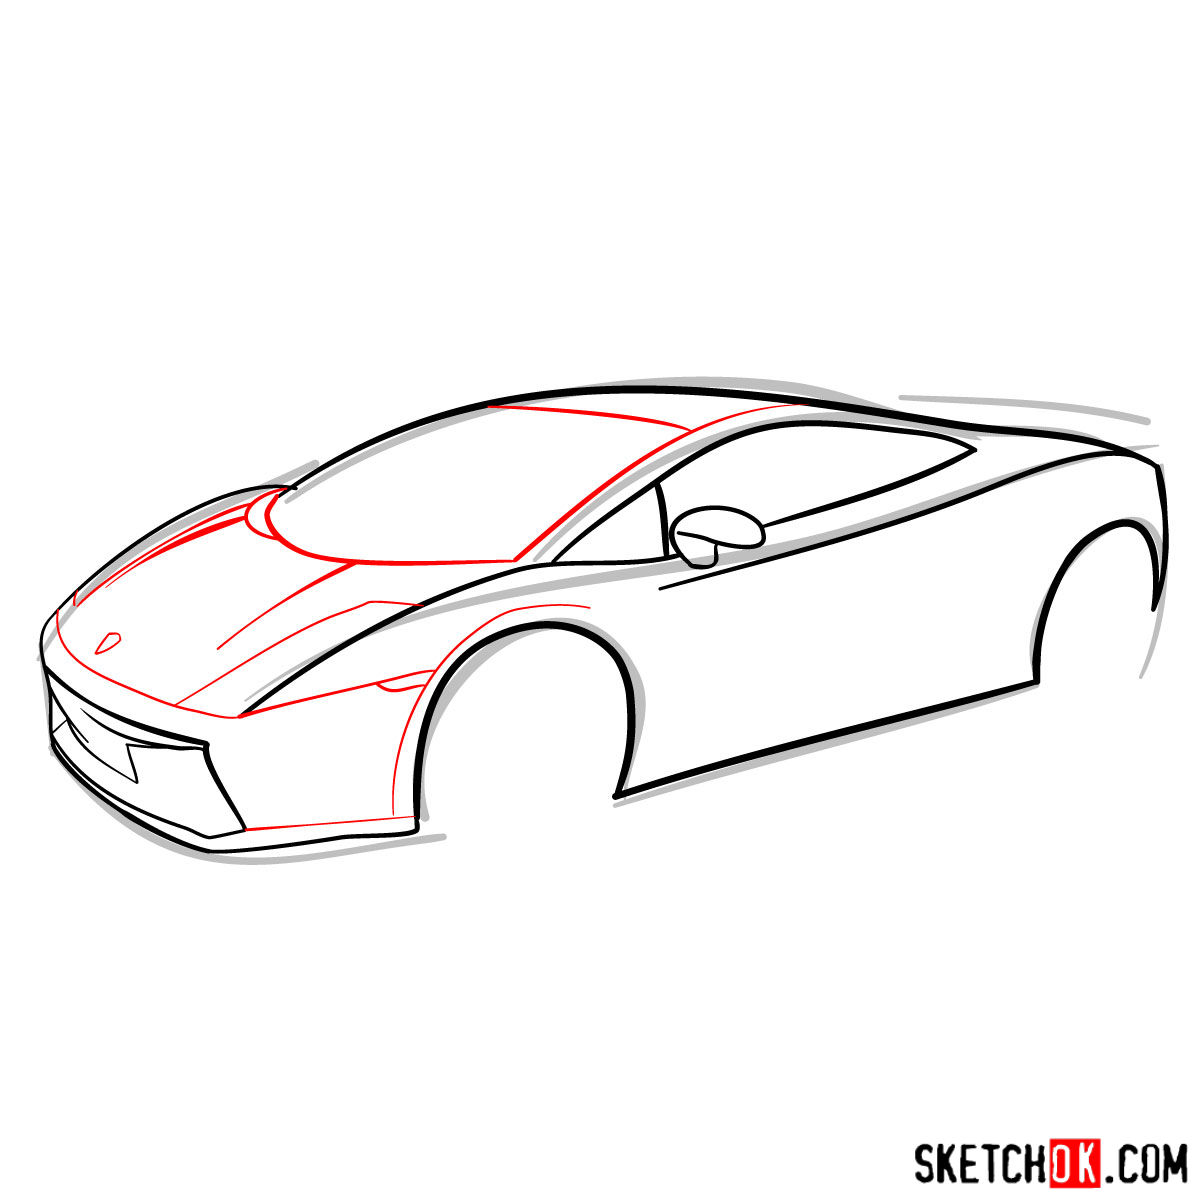 Rev Up Your Pencils: How to Draw Lamborghini Gallardo